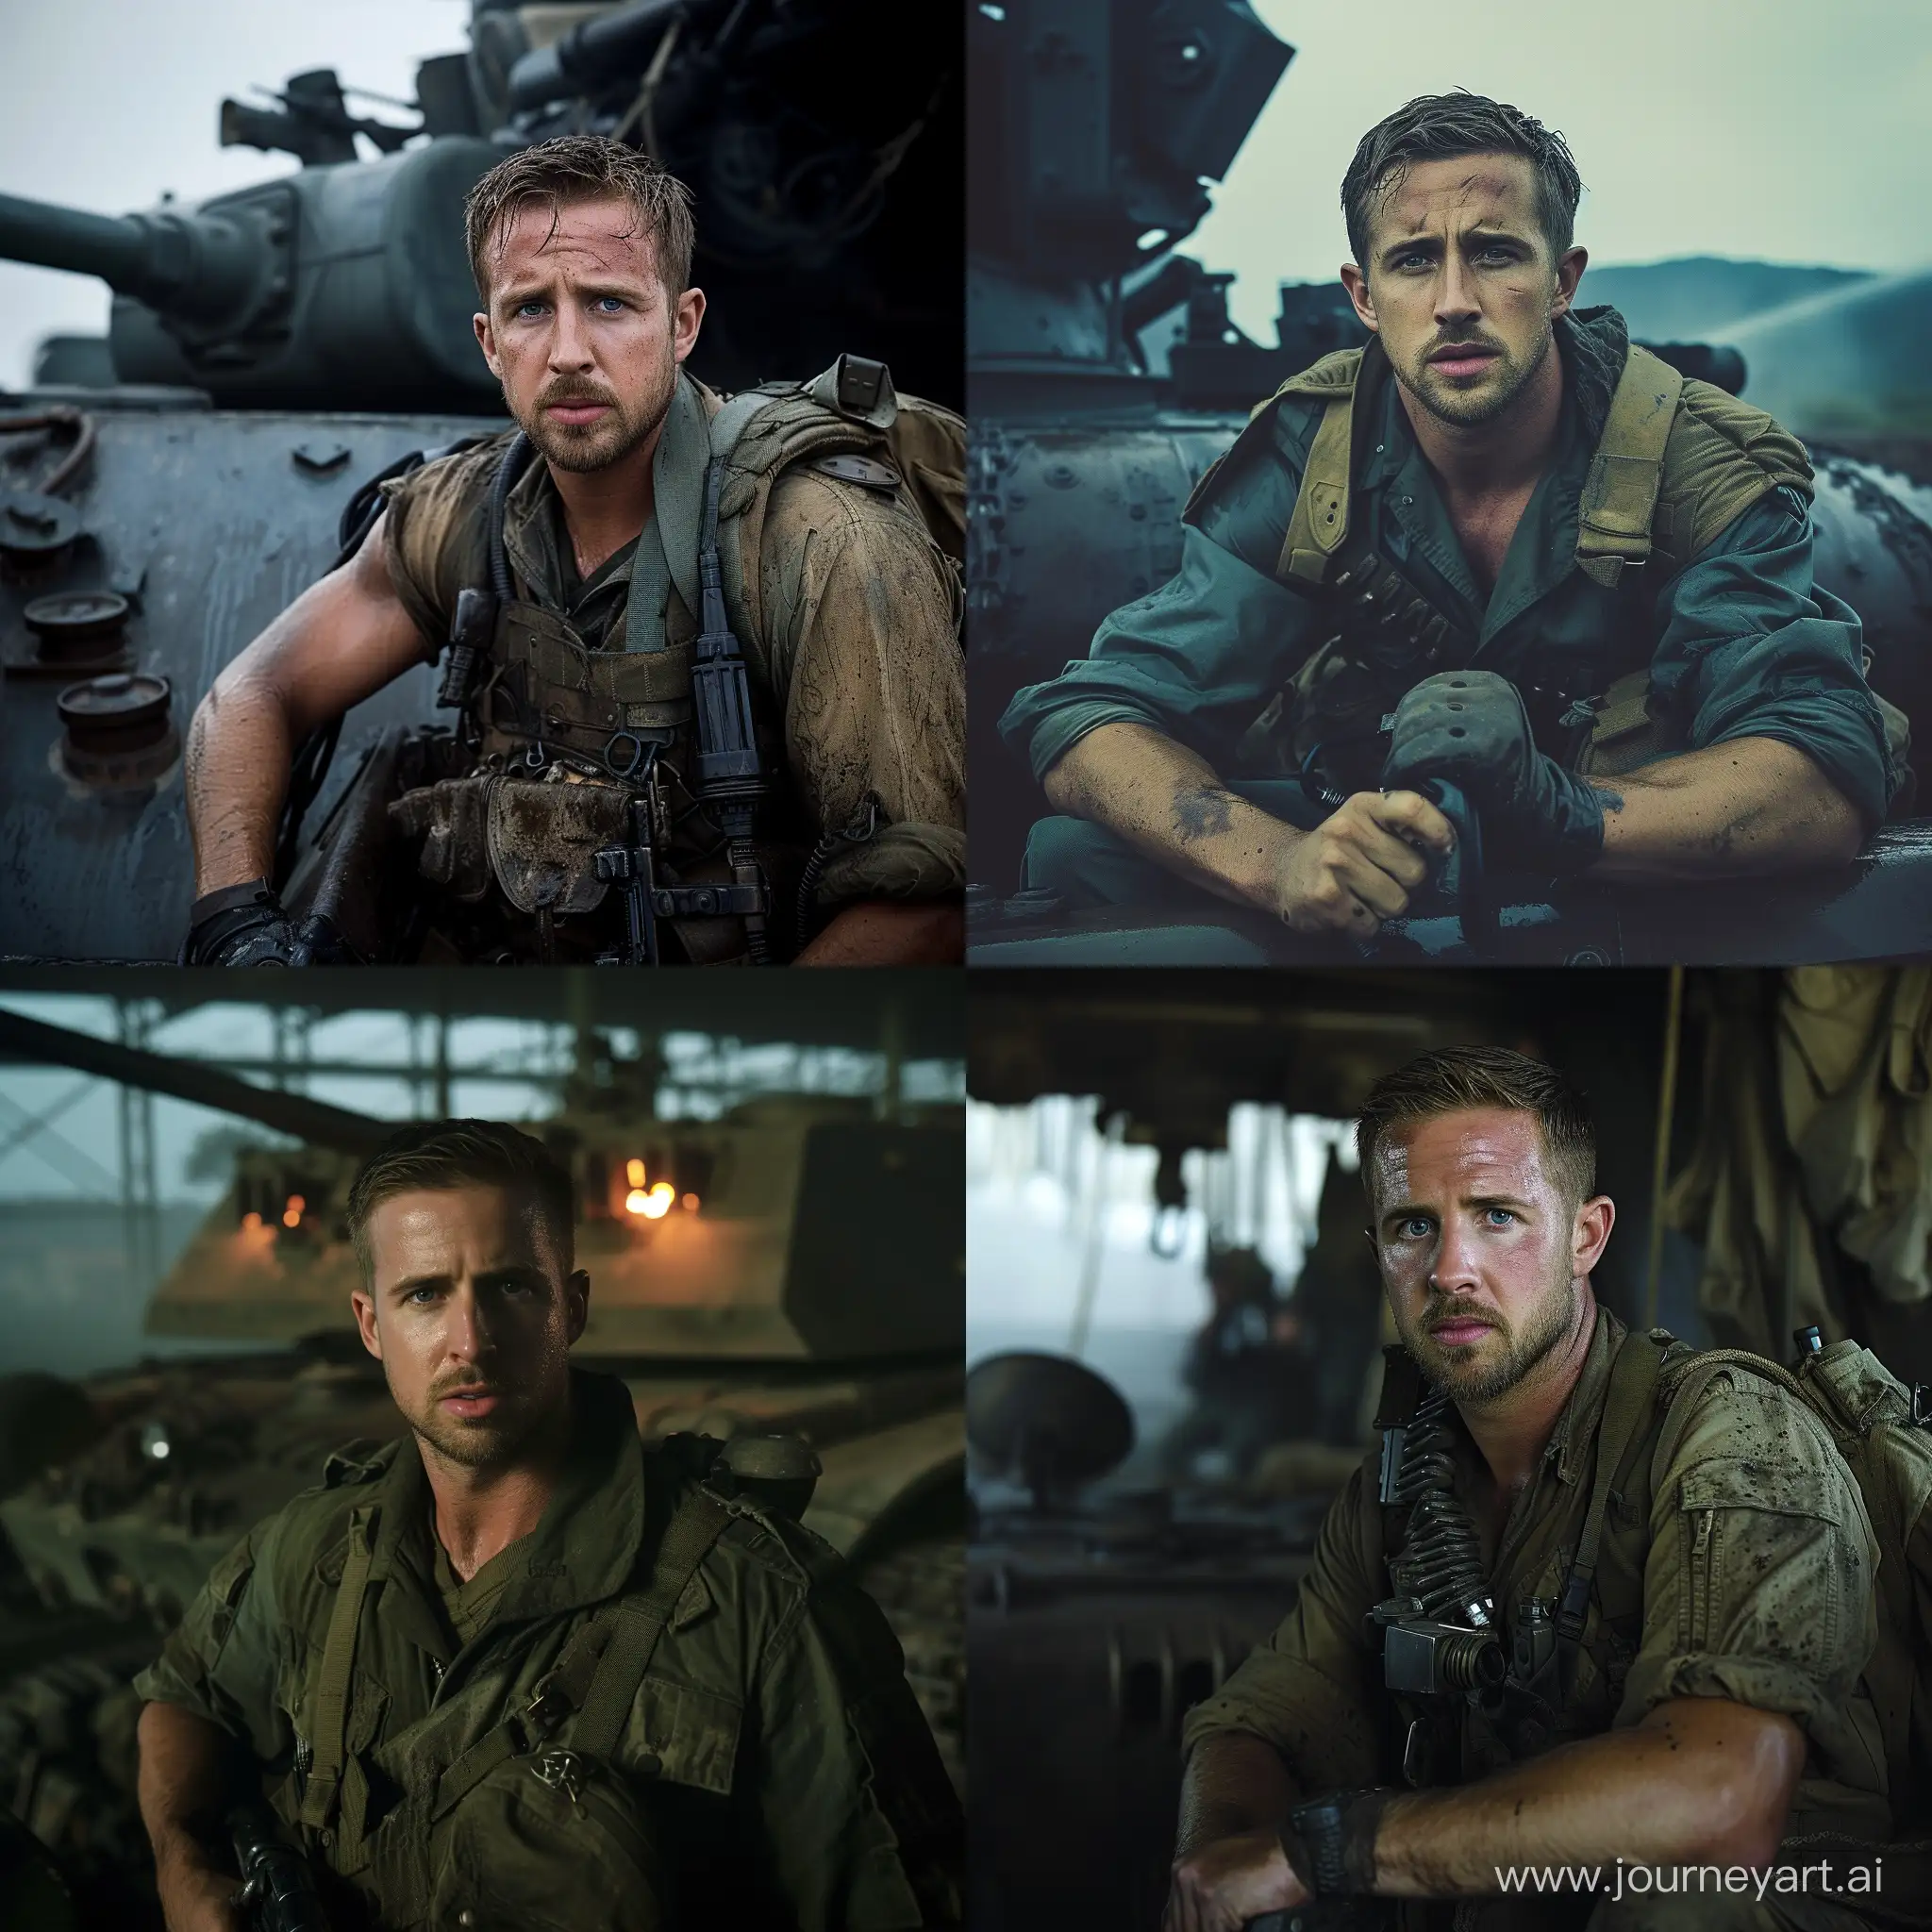 Ryan-Gosling-Driving-a-Tank-in-Stunning-11-Aspect-Ratio-Image-98298